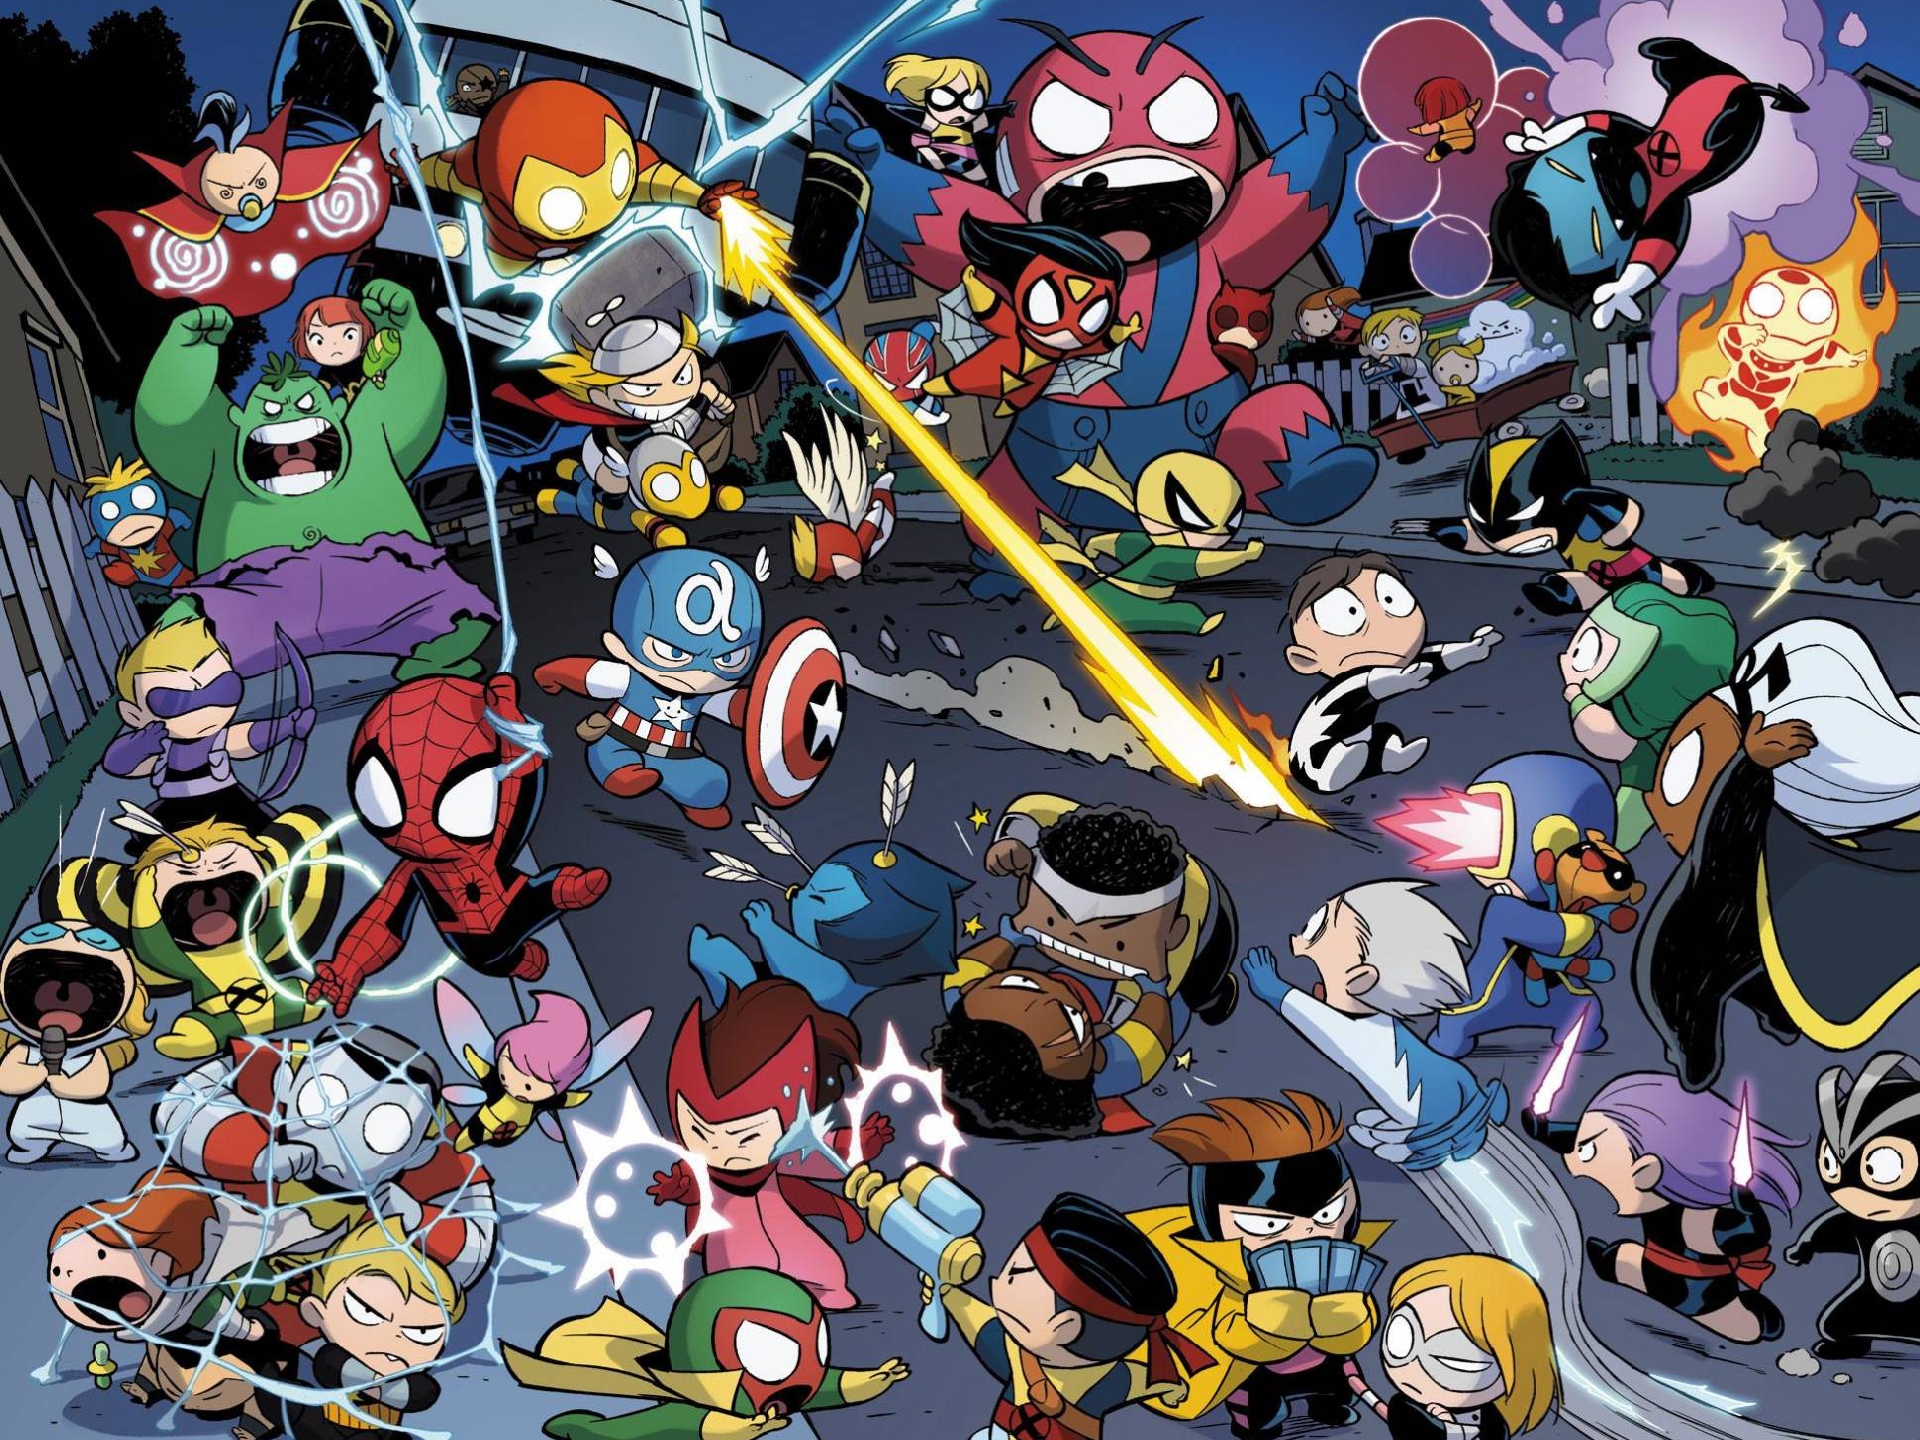 hulk, vision (marvel comics), colossus, quicksilver (marvel comics), comics, avengers vs x men babies, angel (marvel comics), avengers, banshee (marvel comics), beast (marvel comics), bishop (marvel comics), black widow, captain america, carol danvers, cyclops (marvel comics), dazzler (marvel comics), gambit (marvel comics), giant man, havok (marvel comics), hawkeye, hope summers, human torch (marvel comics), iron fist (marvel comics), iron man, longshot (marvel comics), luke cage, ms marvel, namor the sub mariner, nick fury, nightcrawler (marvel comics), pixie (marvel comics), polaris (marvel comics), power pack, psylocke (marvel comics), scarlet witch, spider man, spider woman, storm (marvel comics), wasp (marvel comics), wolverine, x men High Definition image